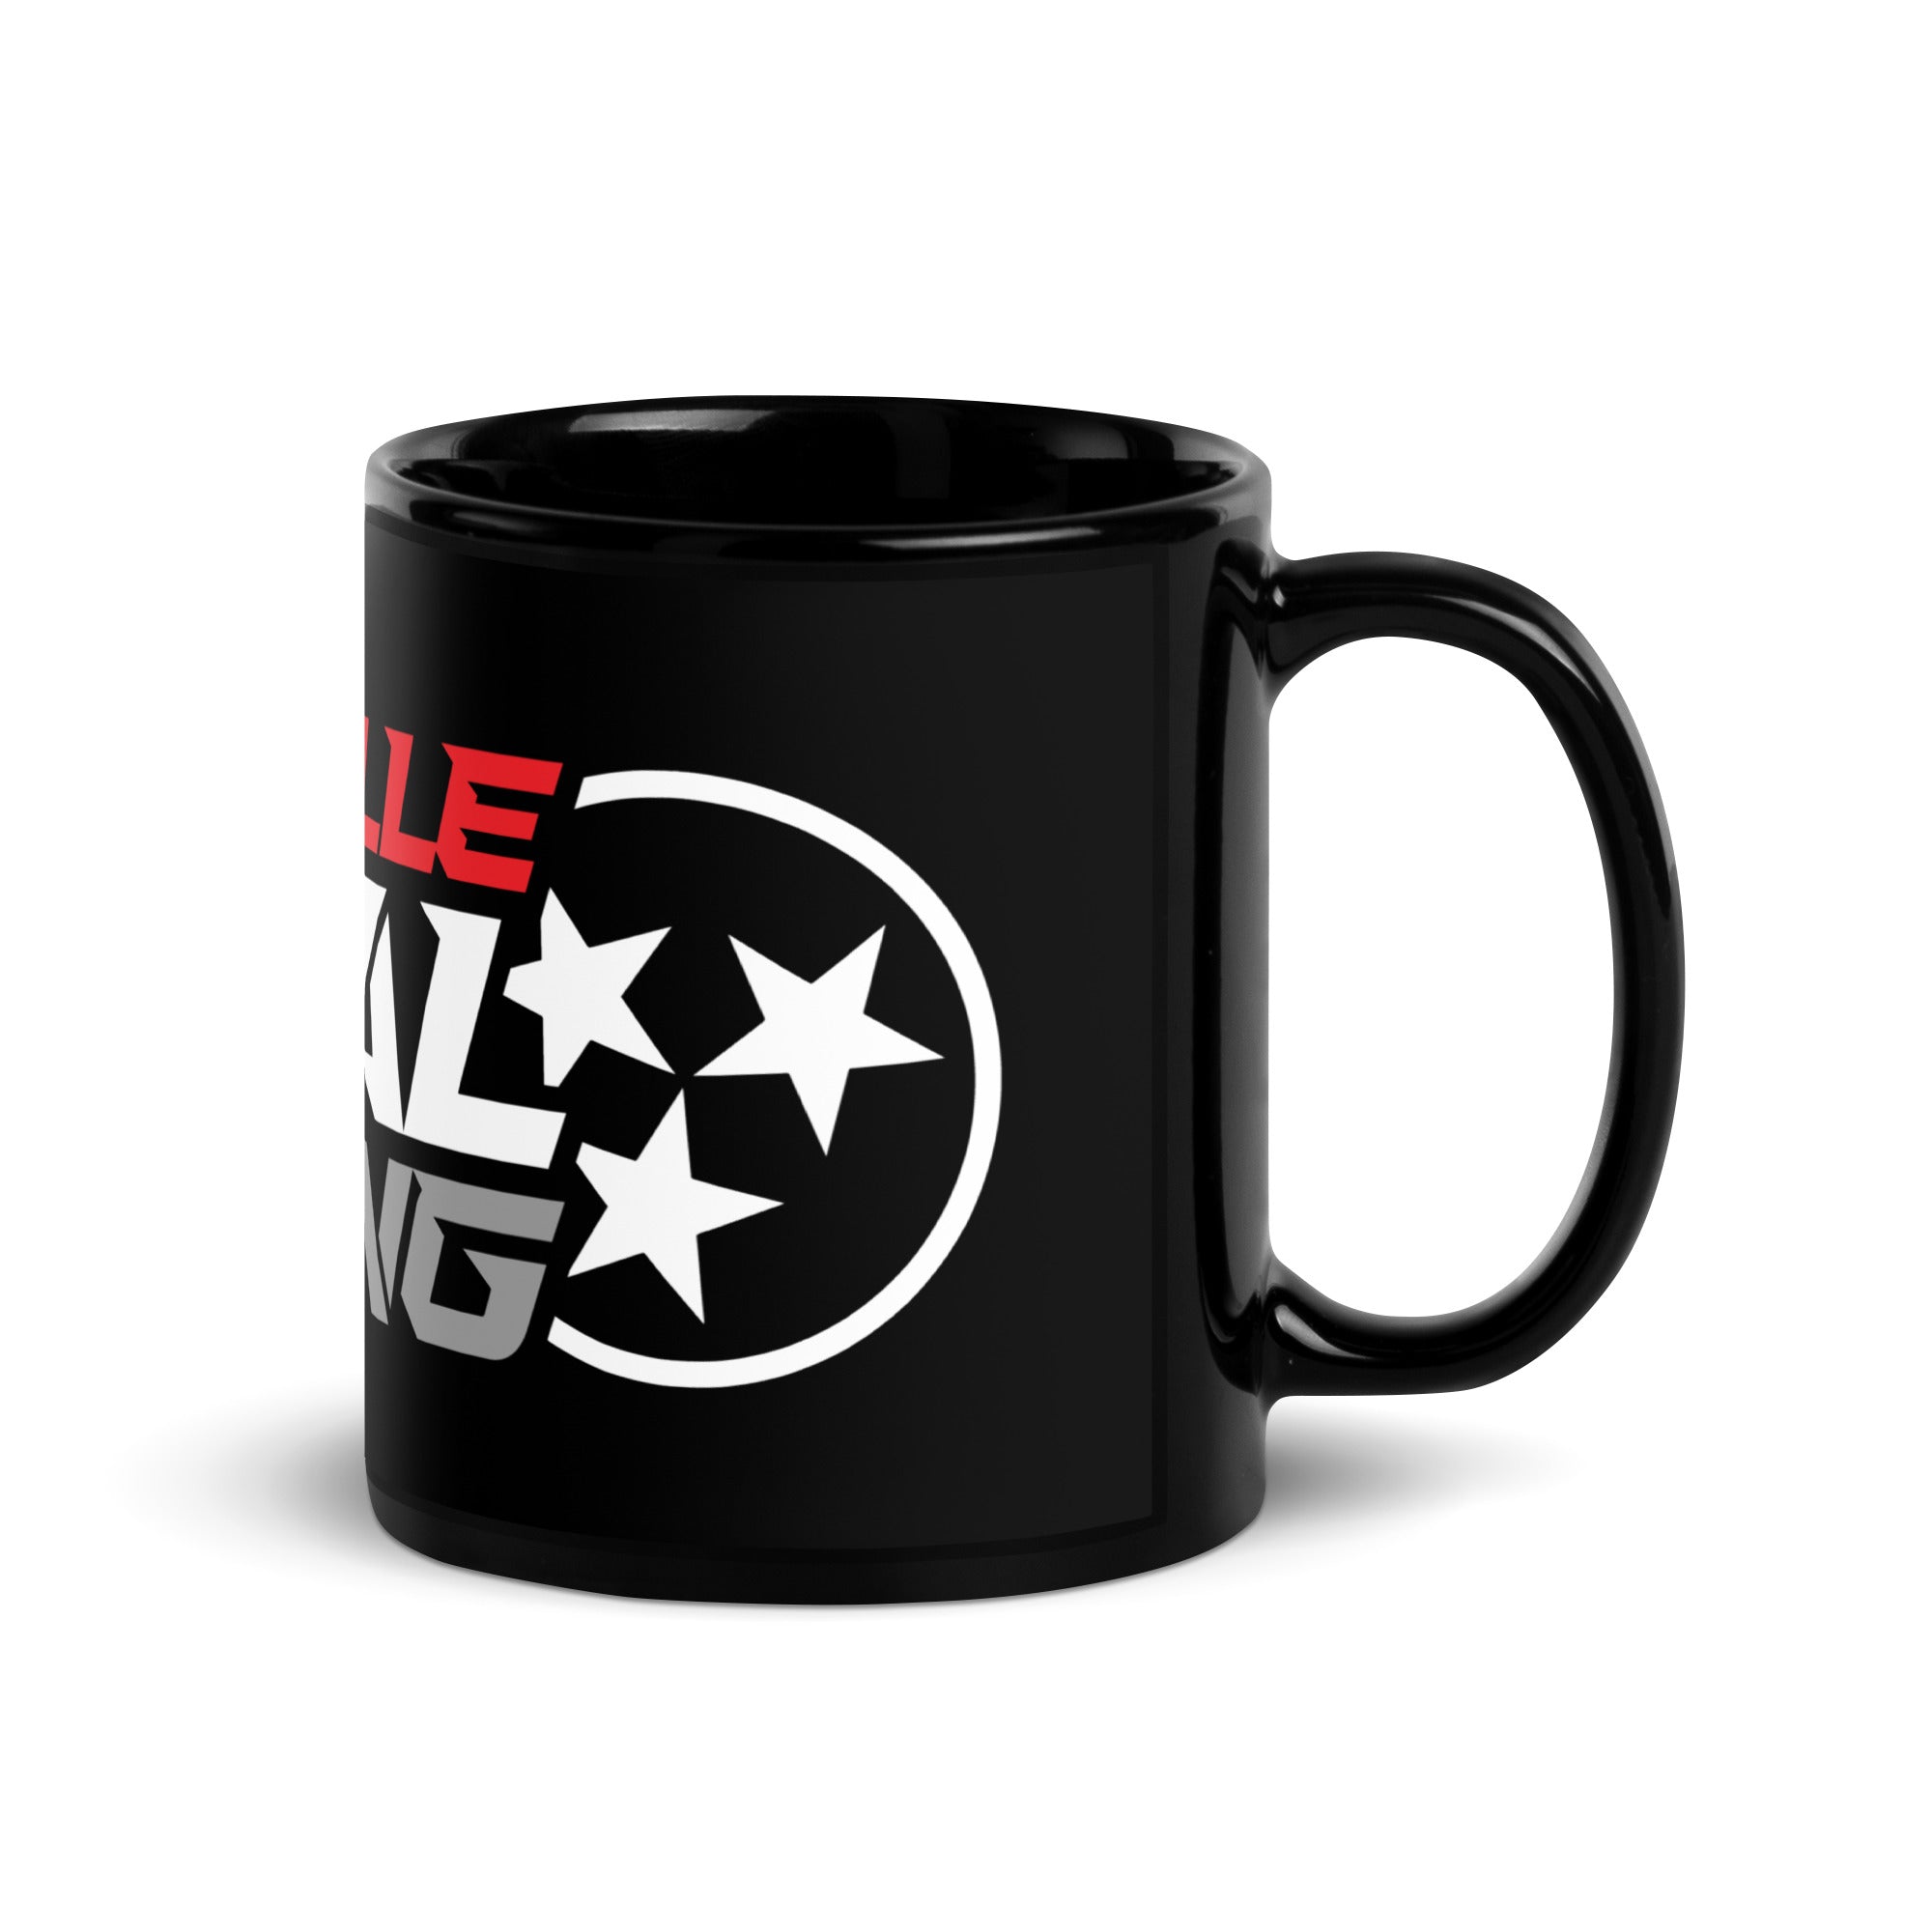 NLC Black Glossy Mug